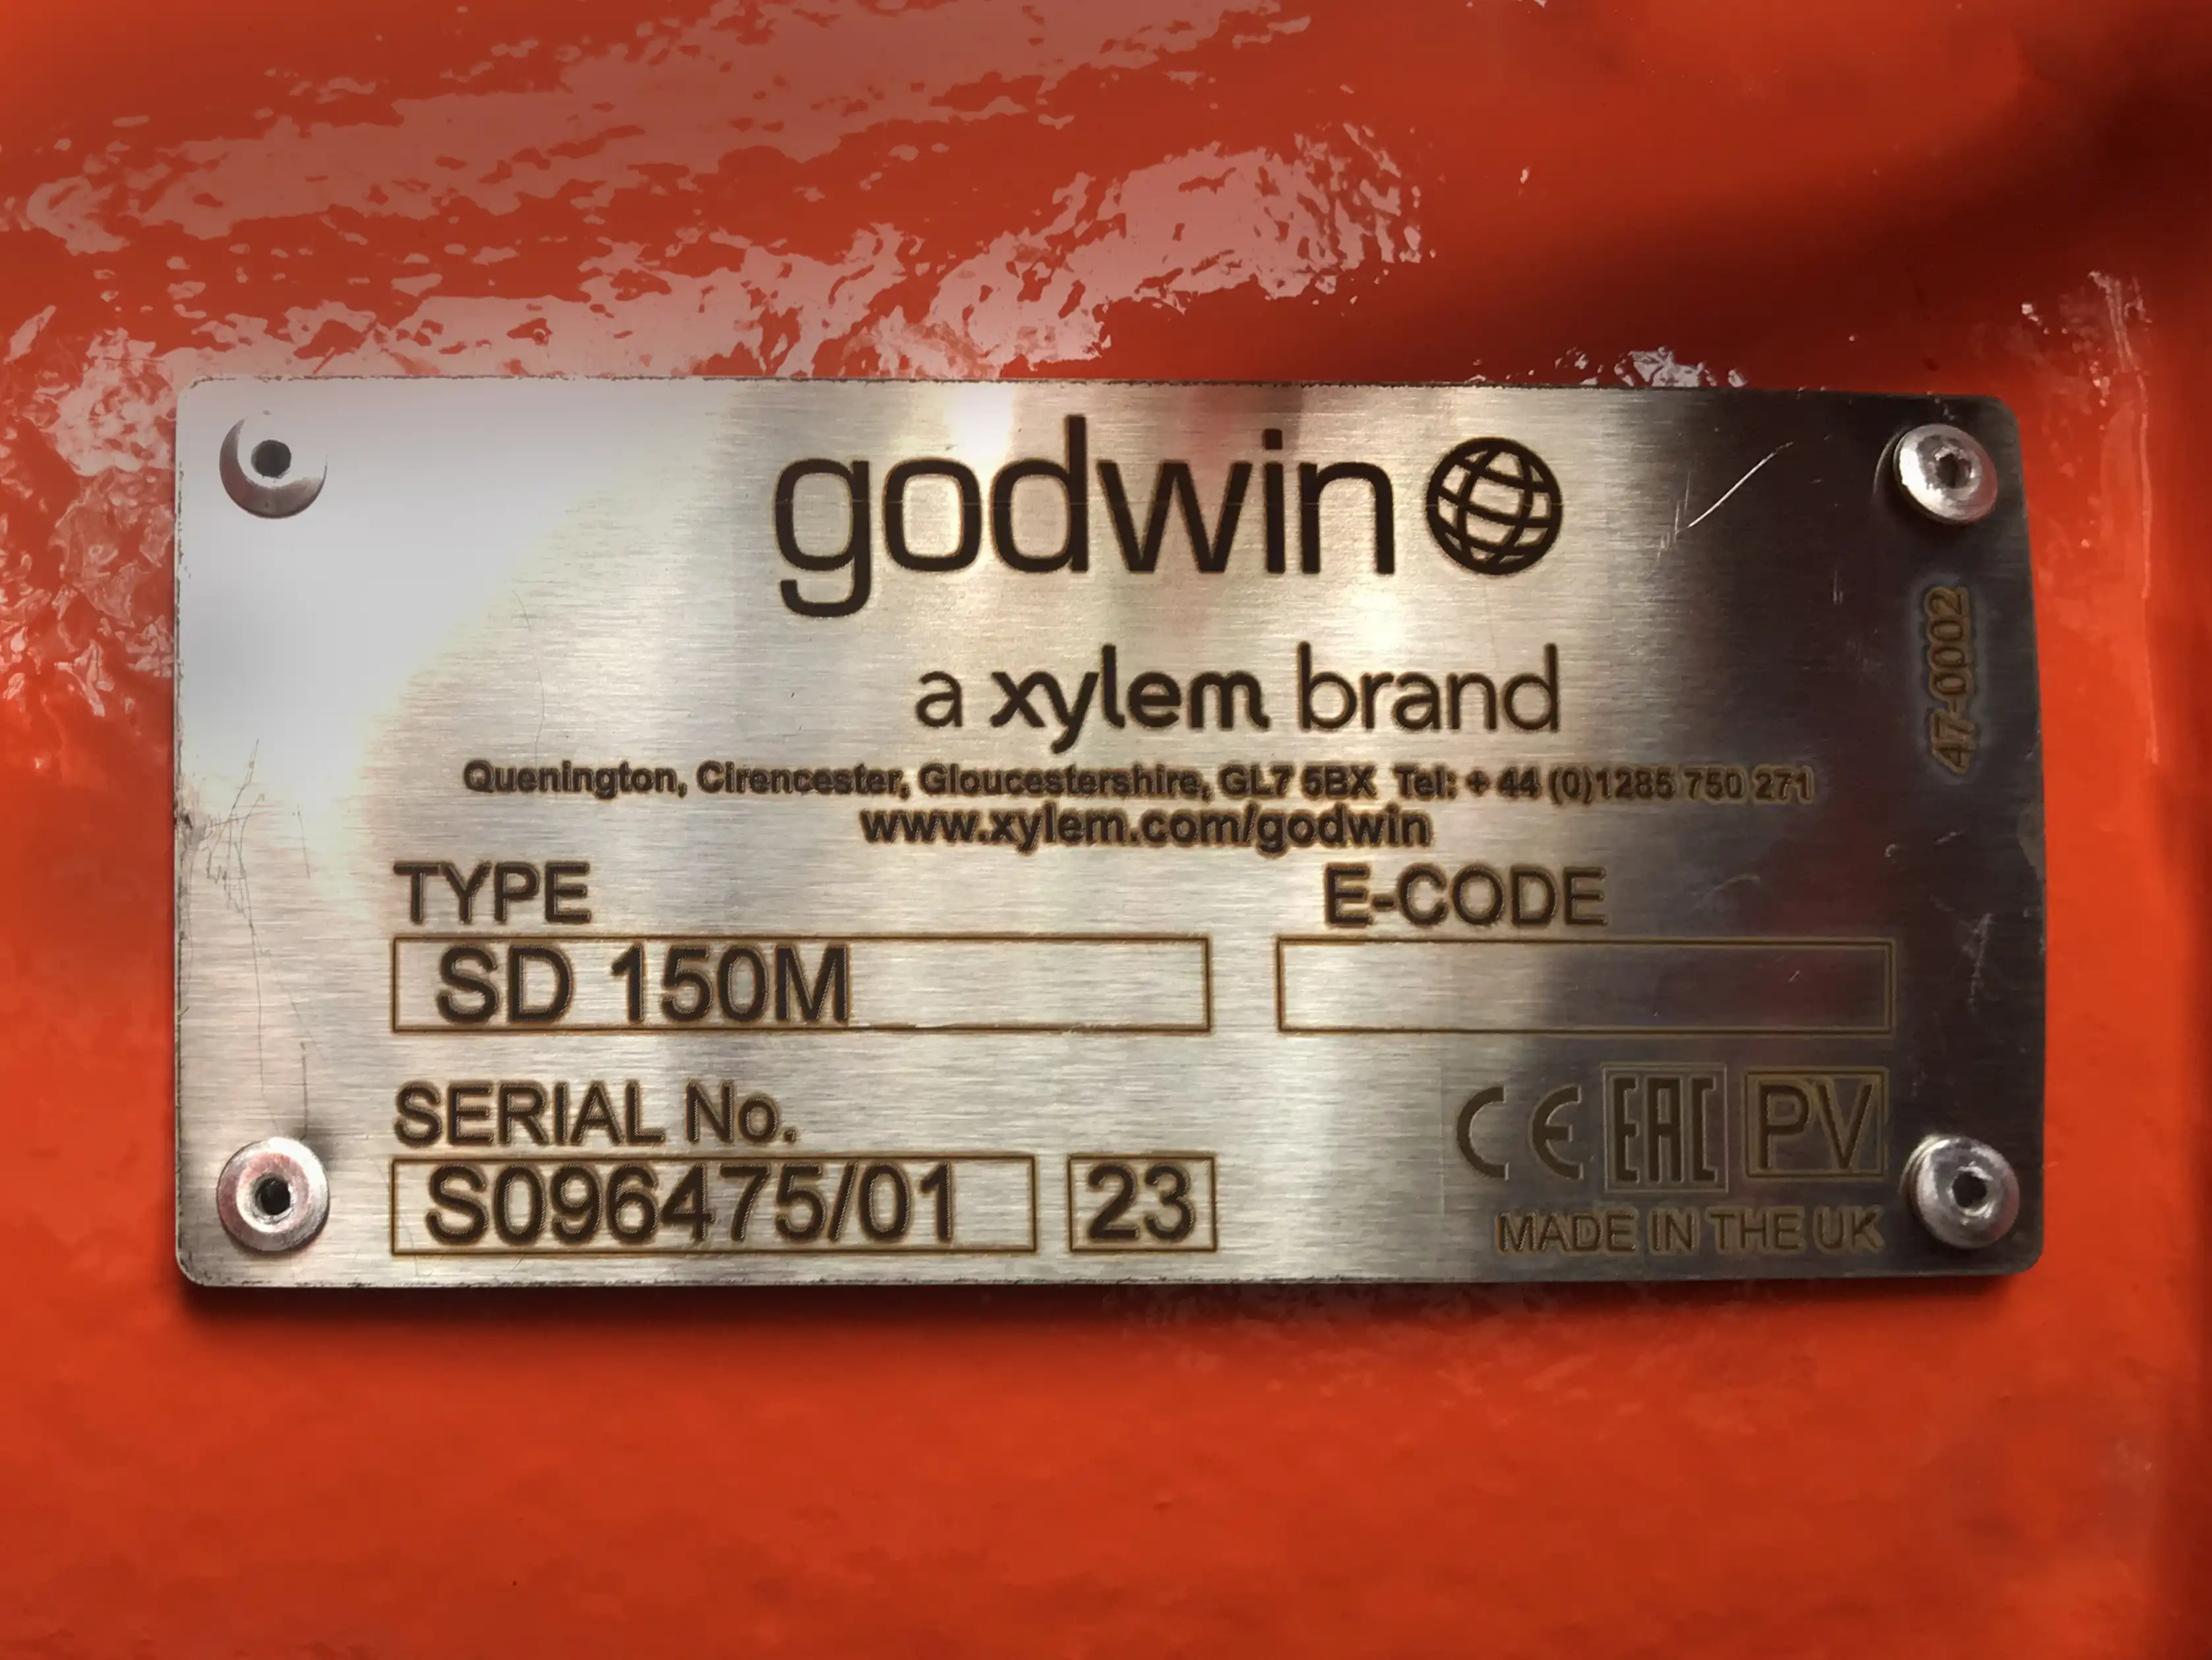 New Godwin SD150M Pump sold in Norfolk